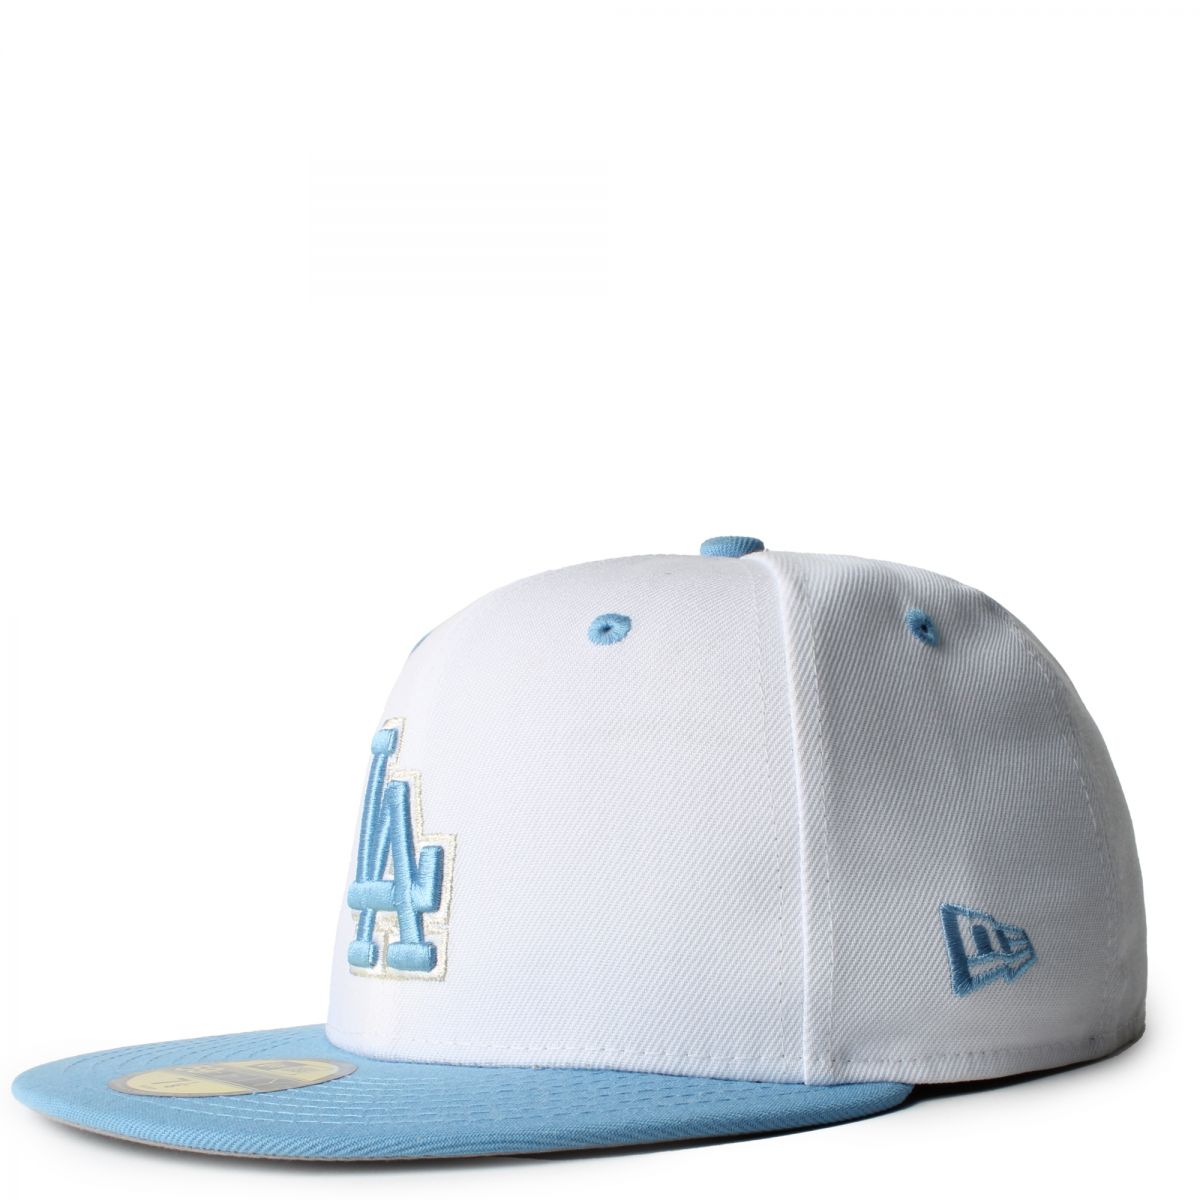 OFF-WHITE New Era LA Dodgers Fitted Hat Cream/Blue - US